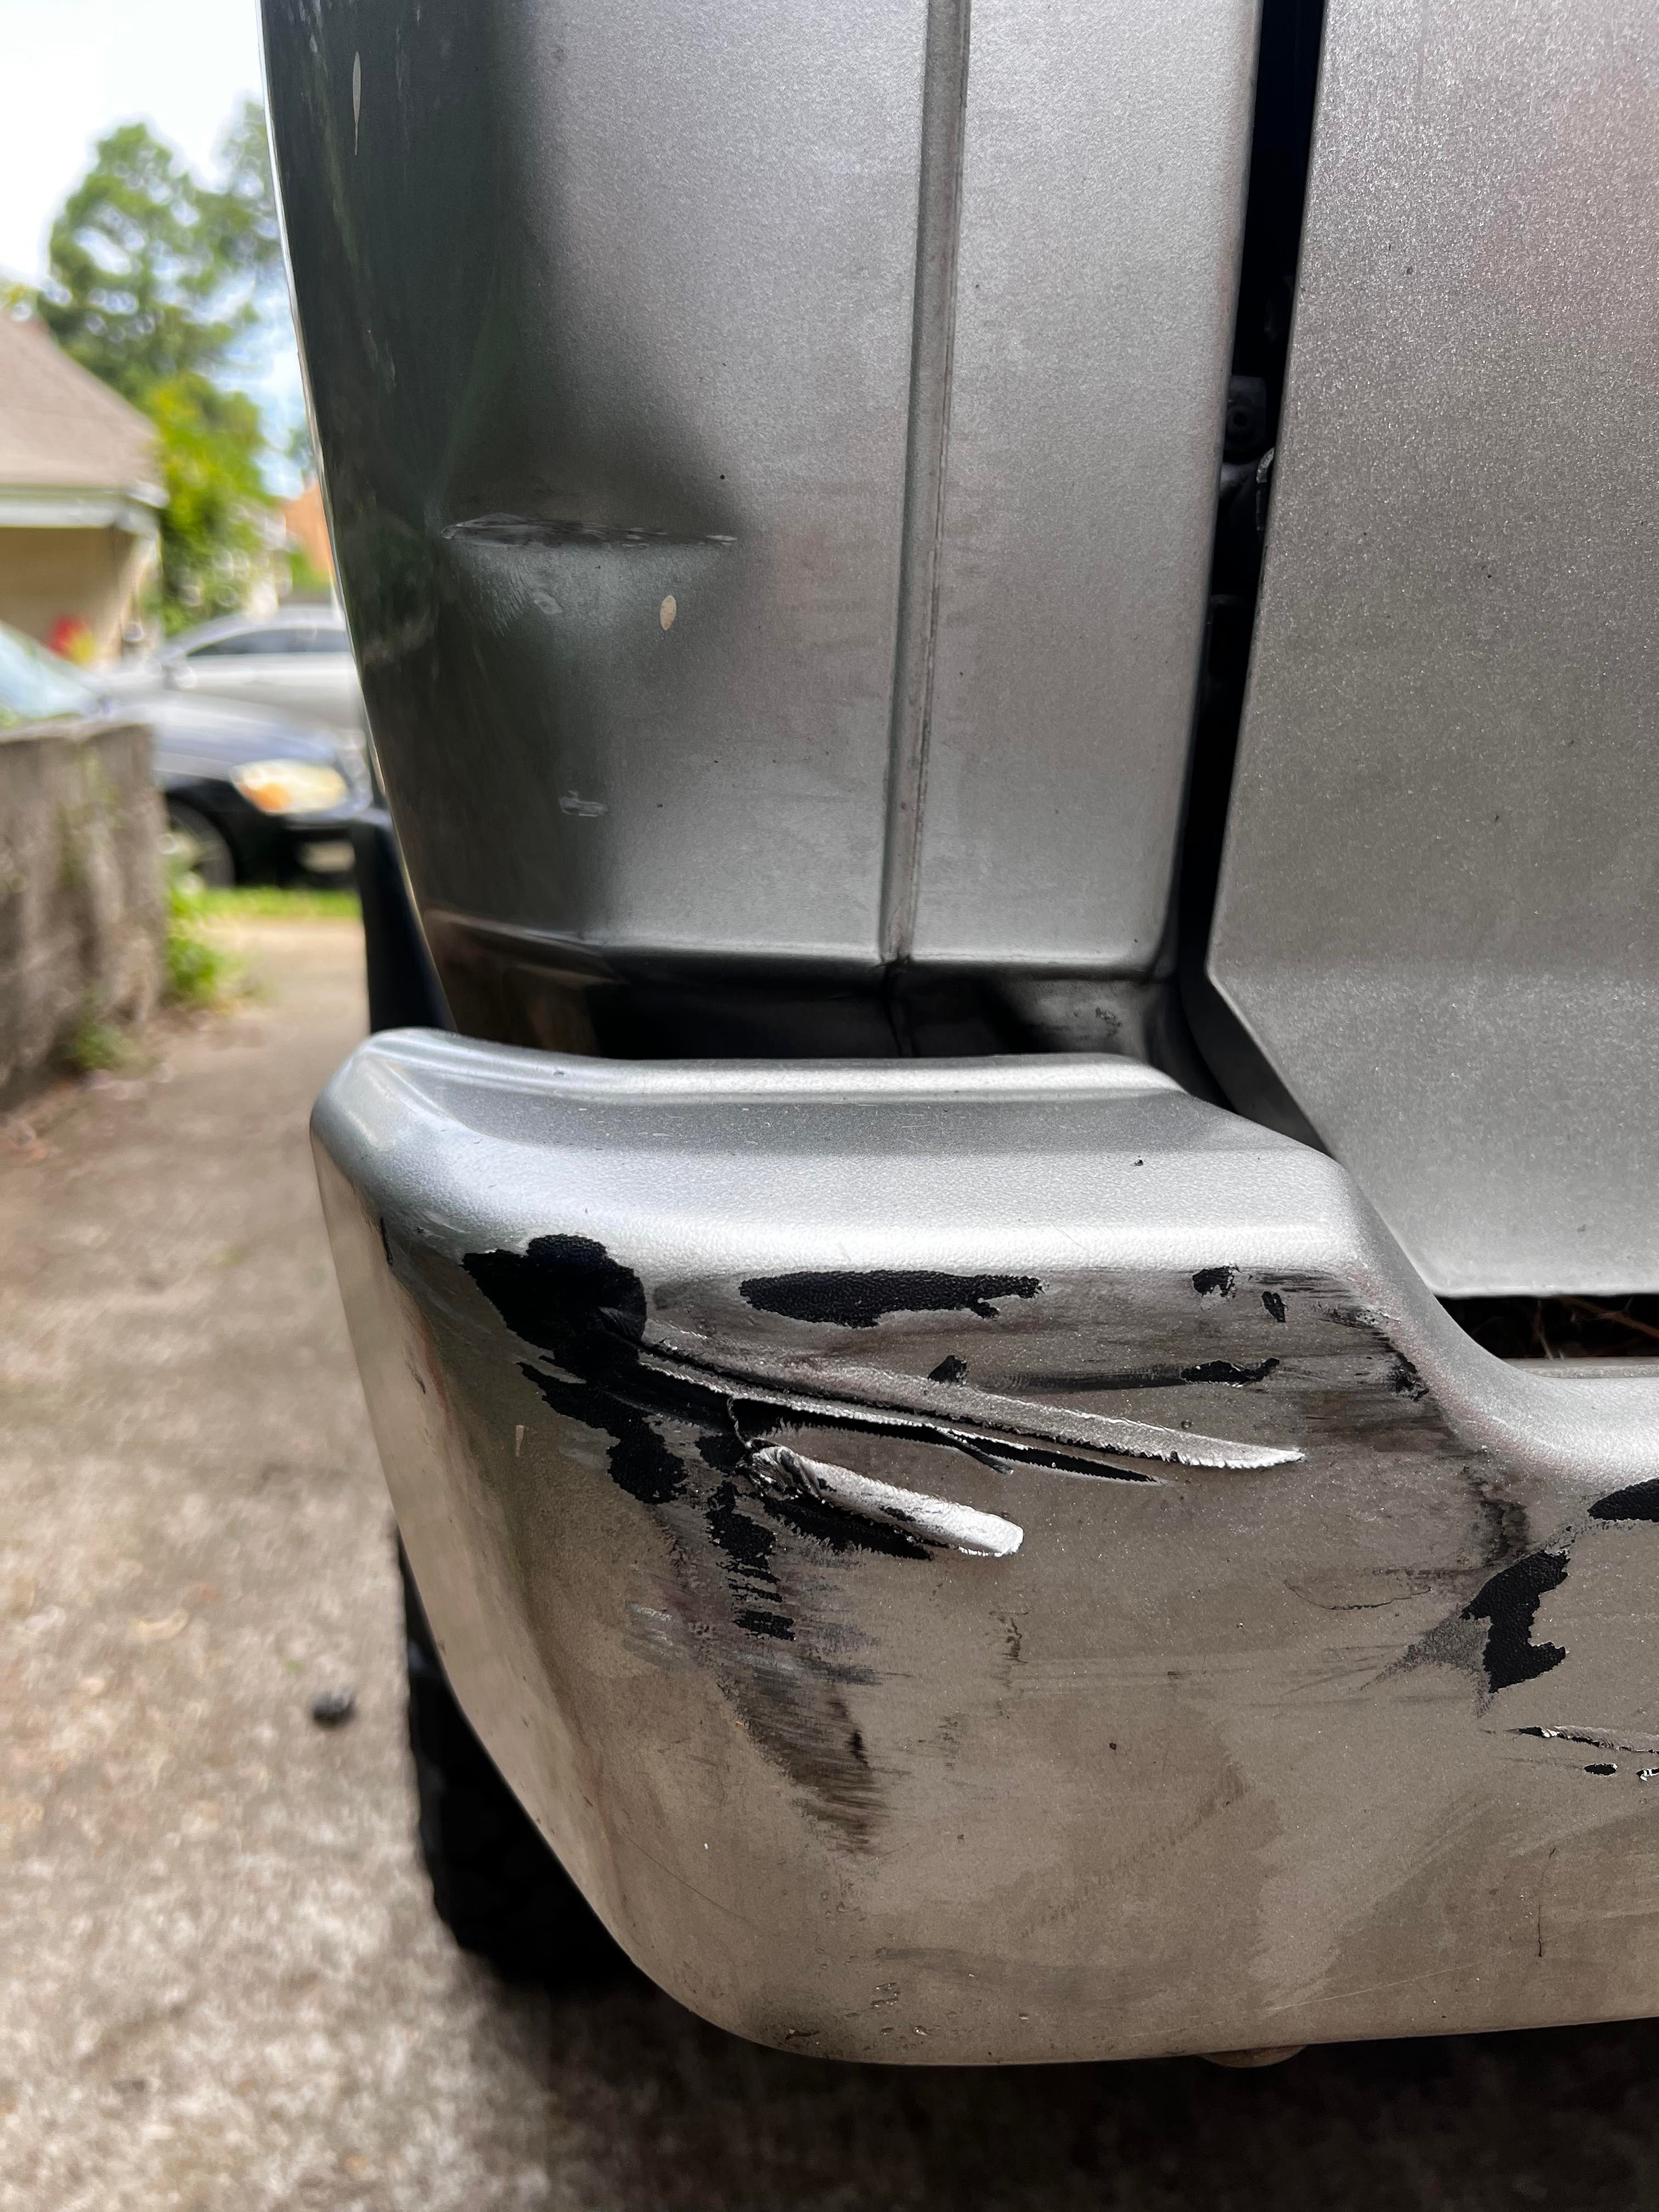 damage to rear of van